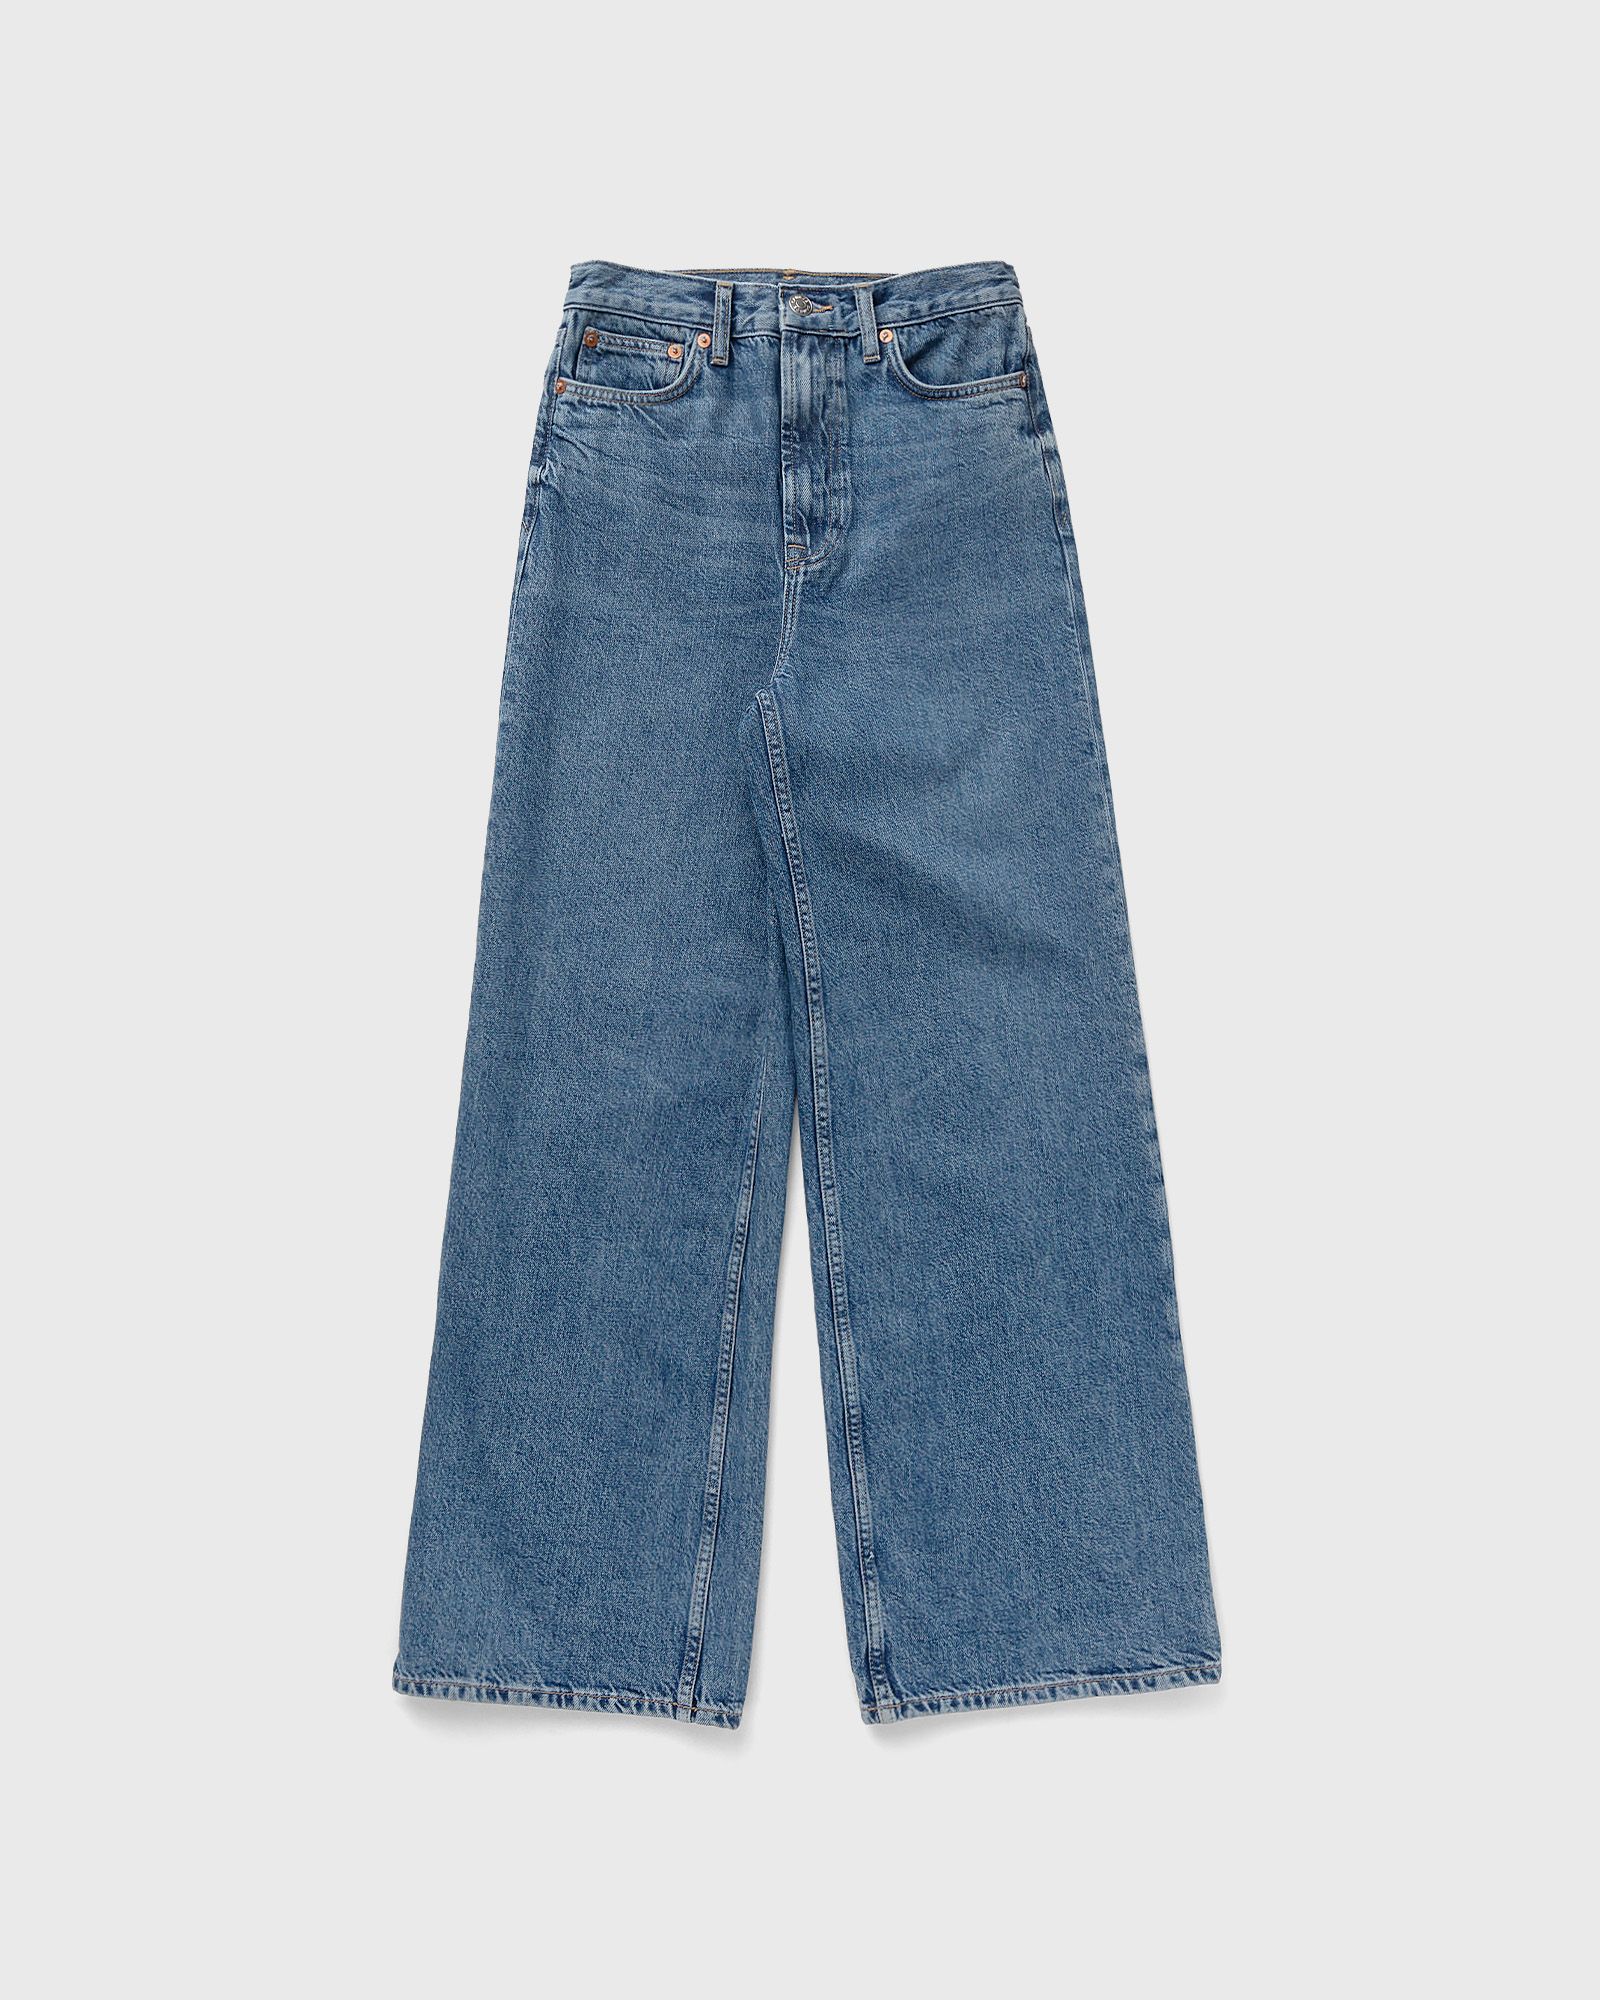 Samsøe & Samsøe - rebecca jeans 15060 women jeans blue in größe:m